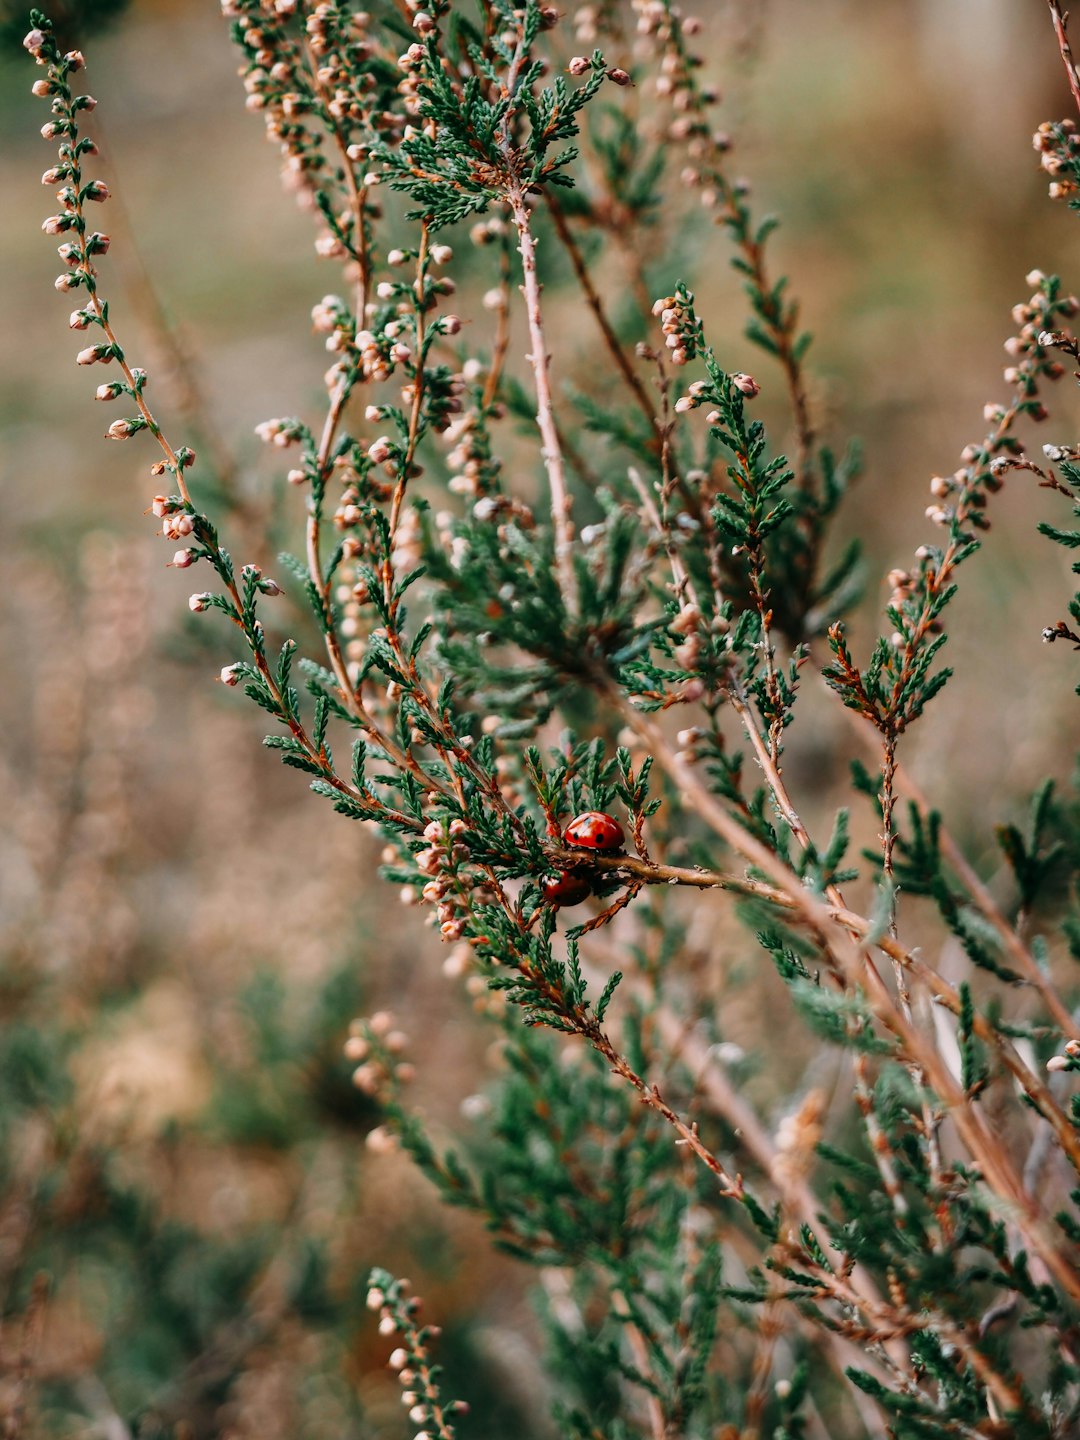 red and black ladybug on brown plant stem